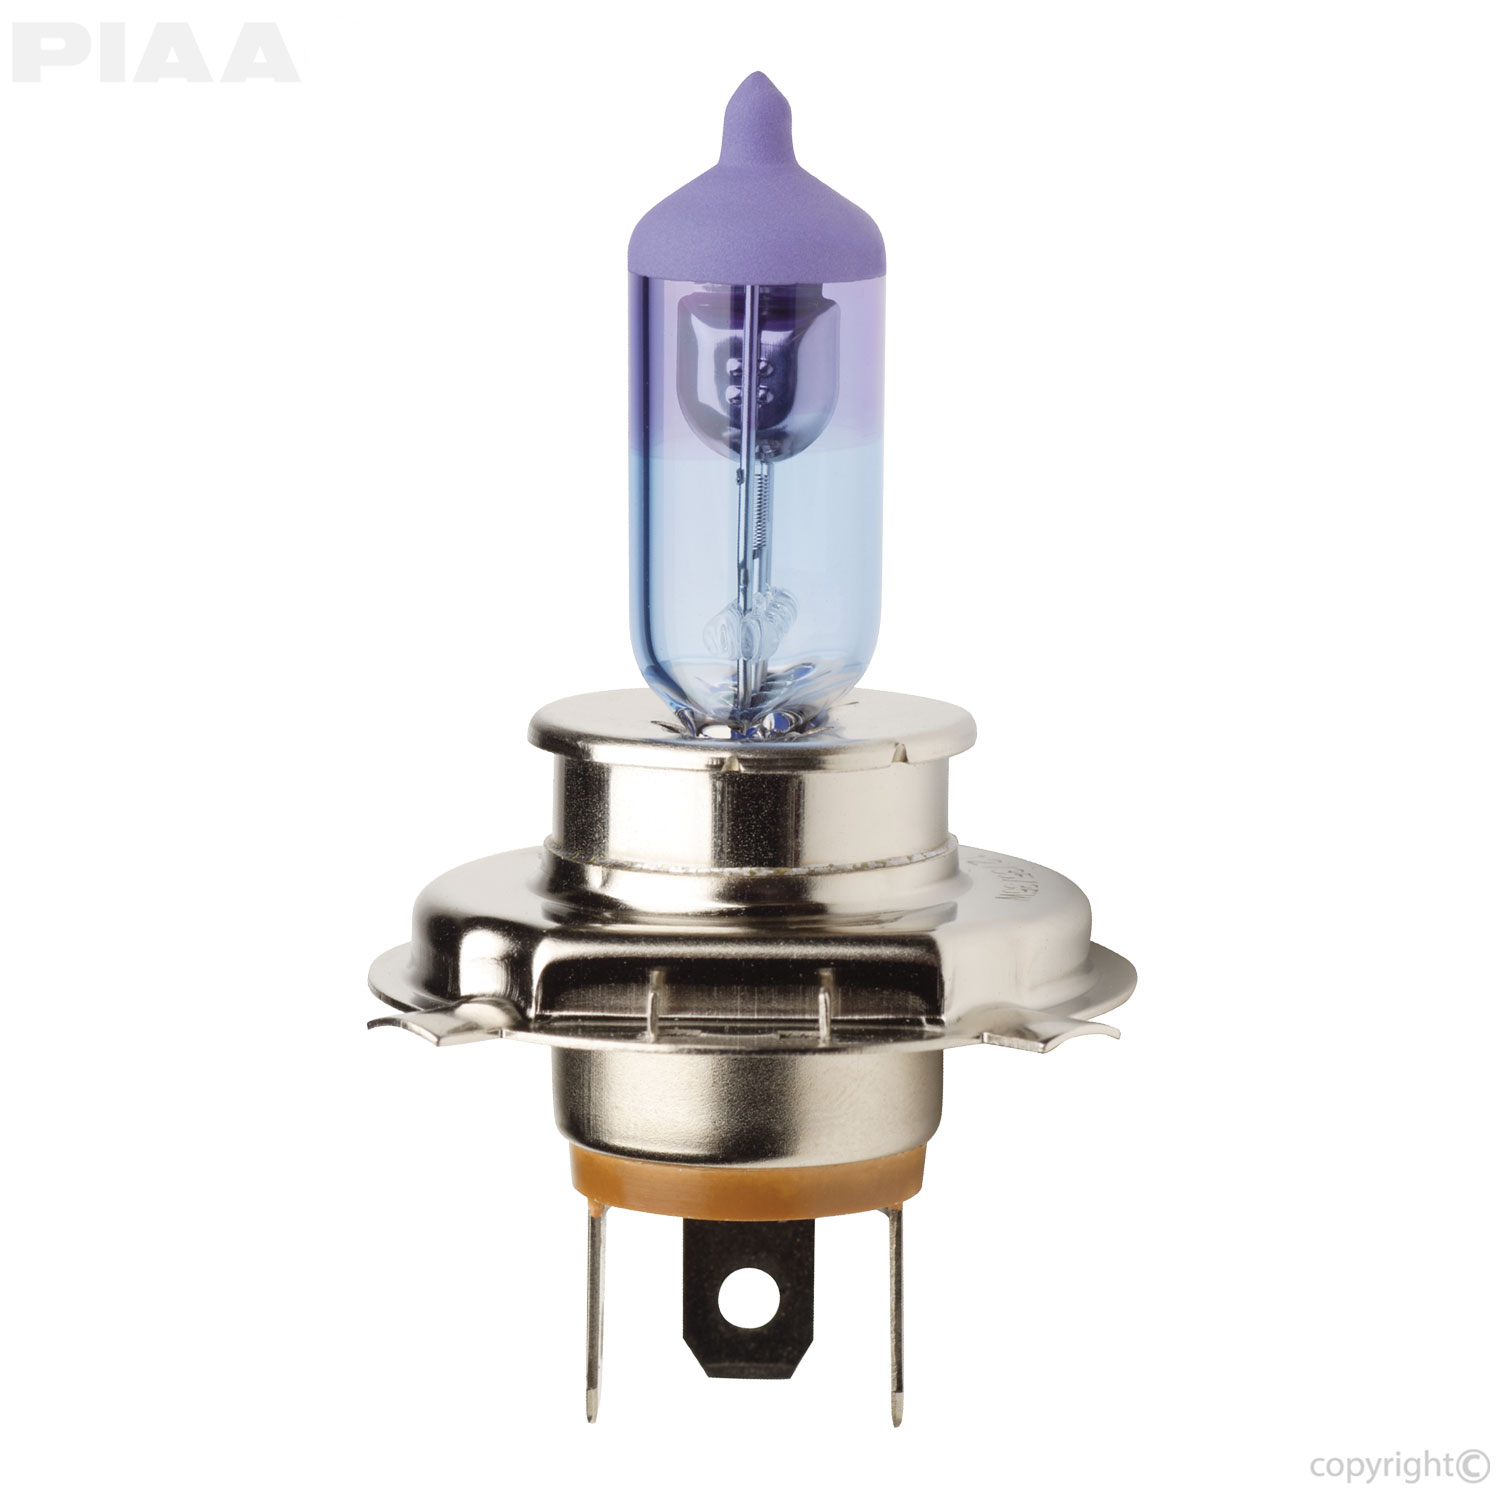 PIAA 70476 Super Plasma GT-X Anti-vibration H4 Bulb 